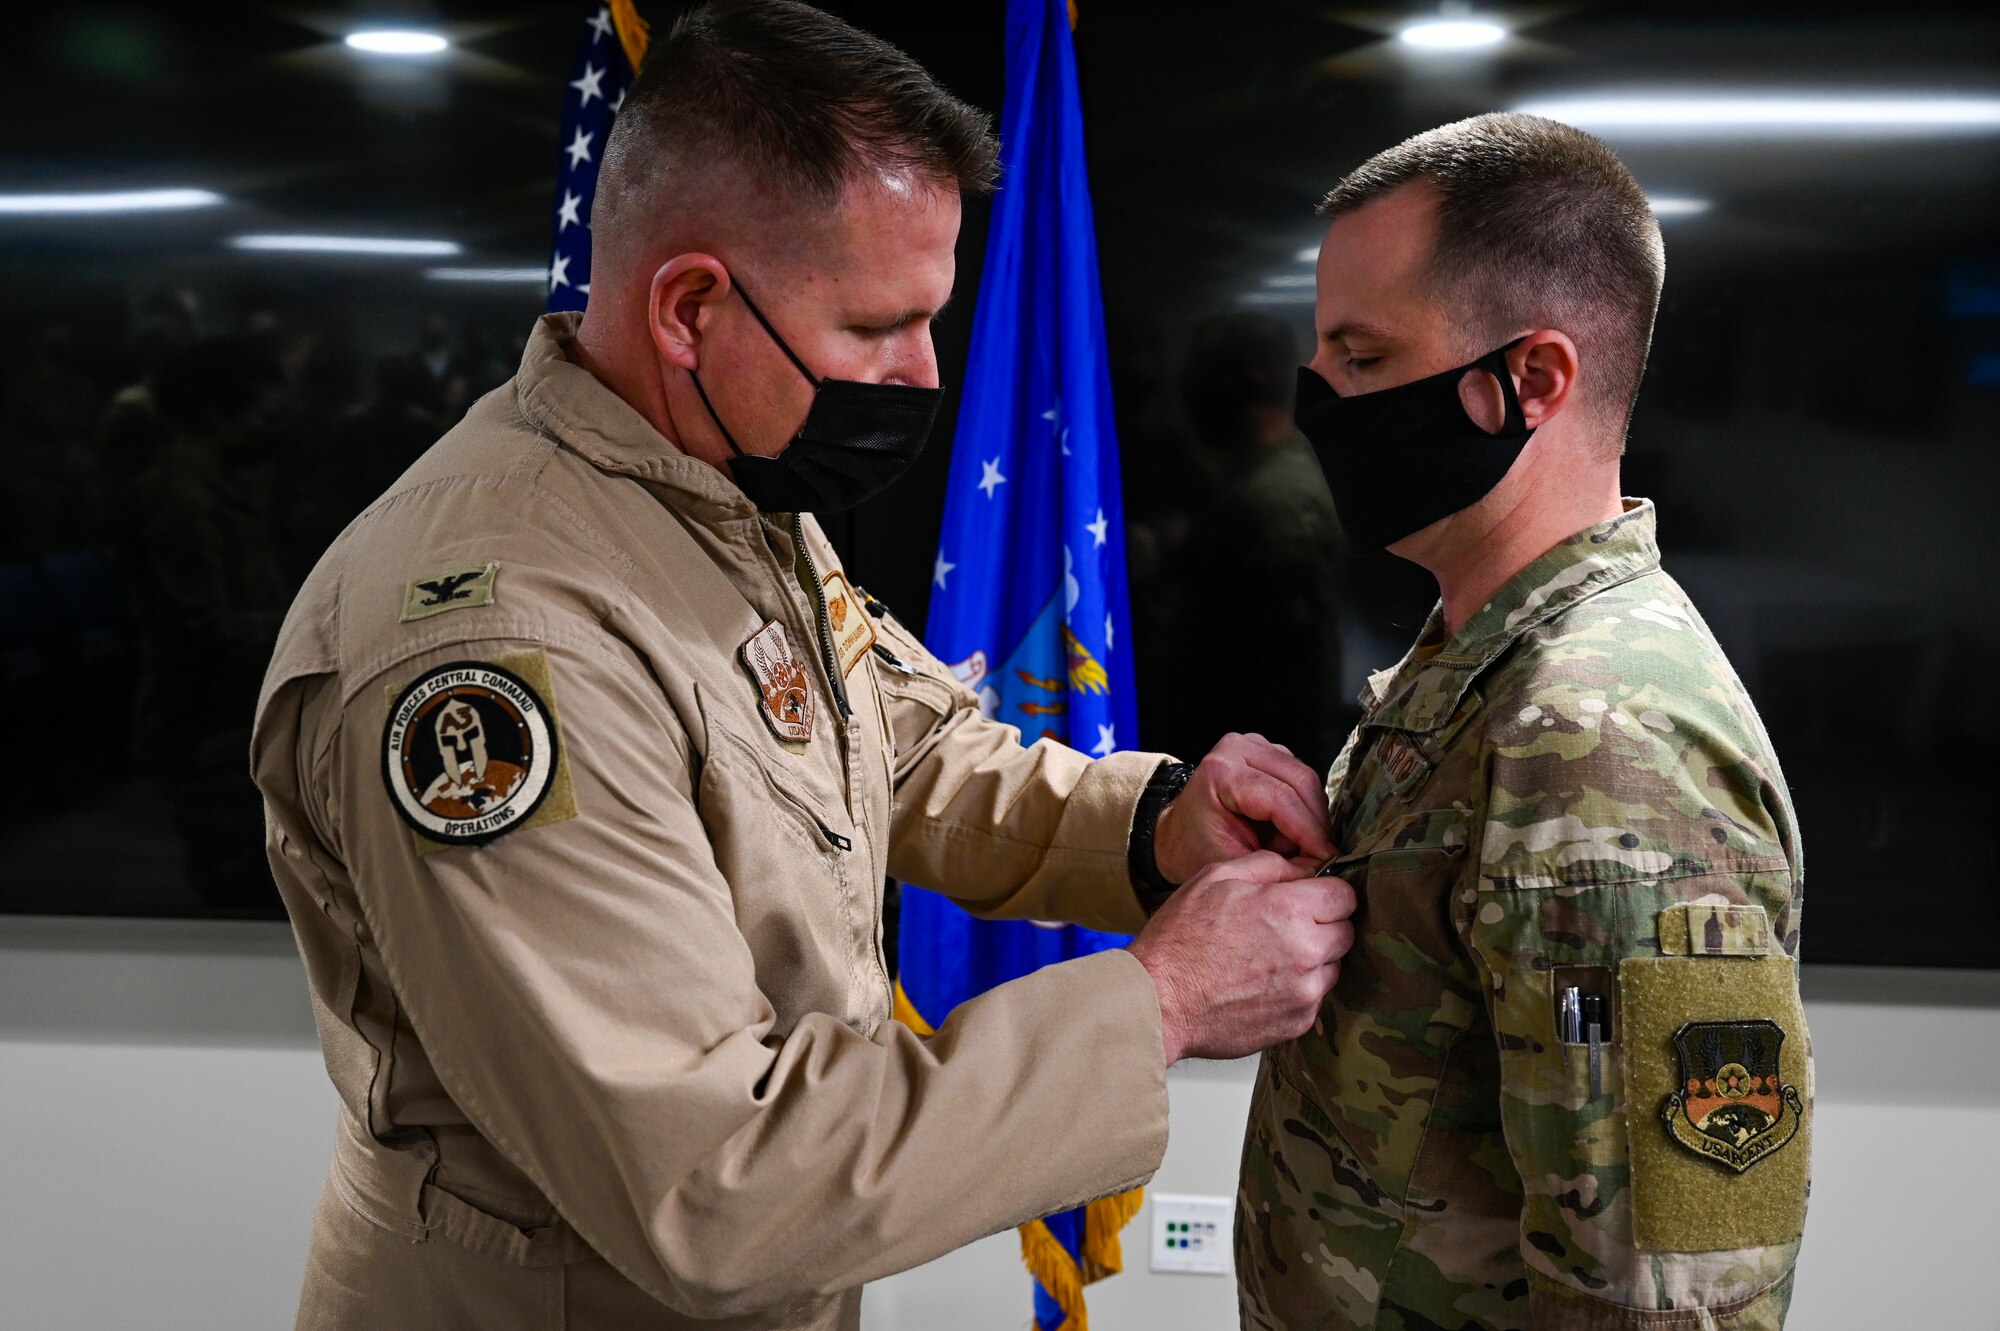 A photo of an airman receiving an award